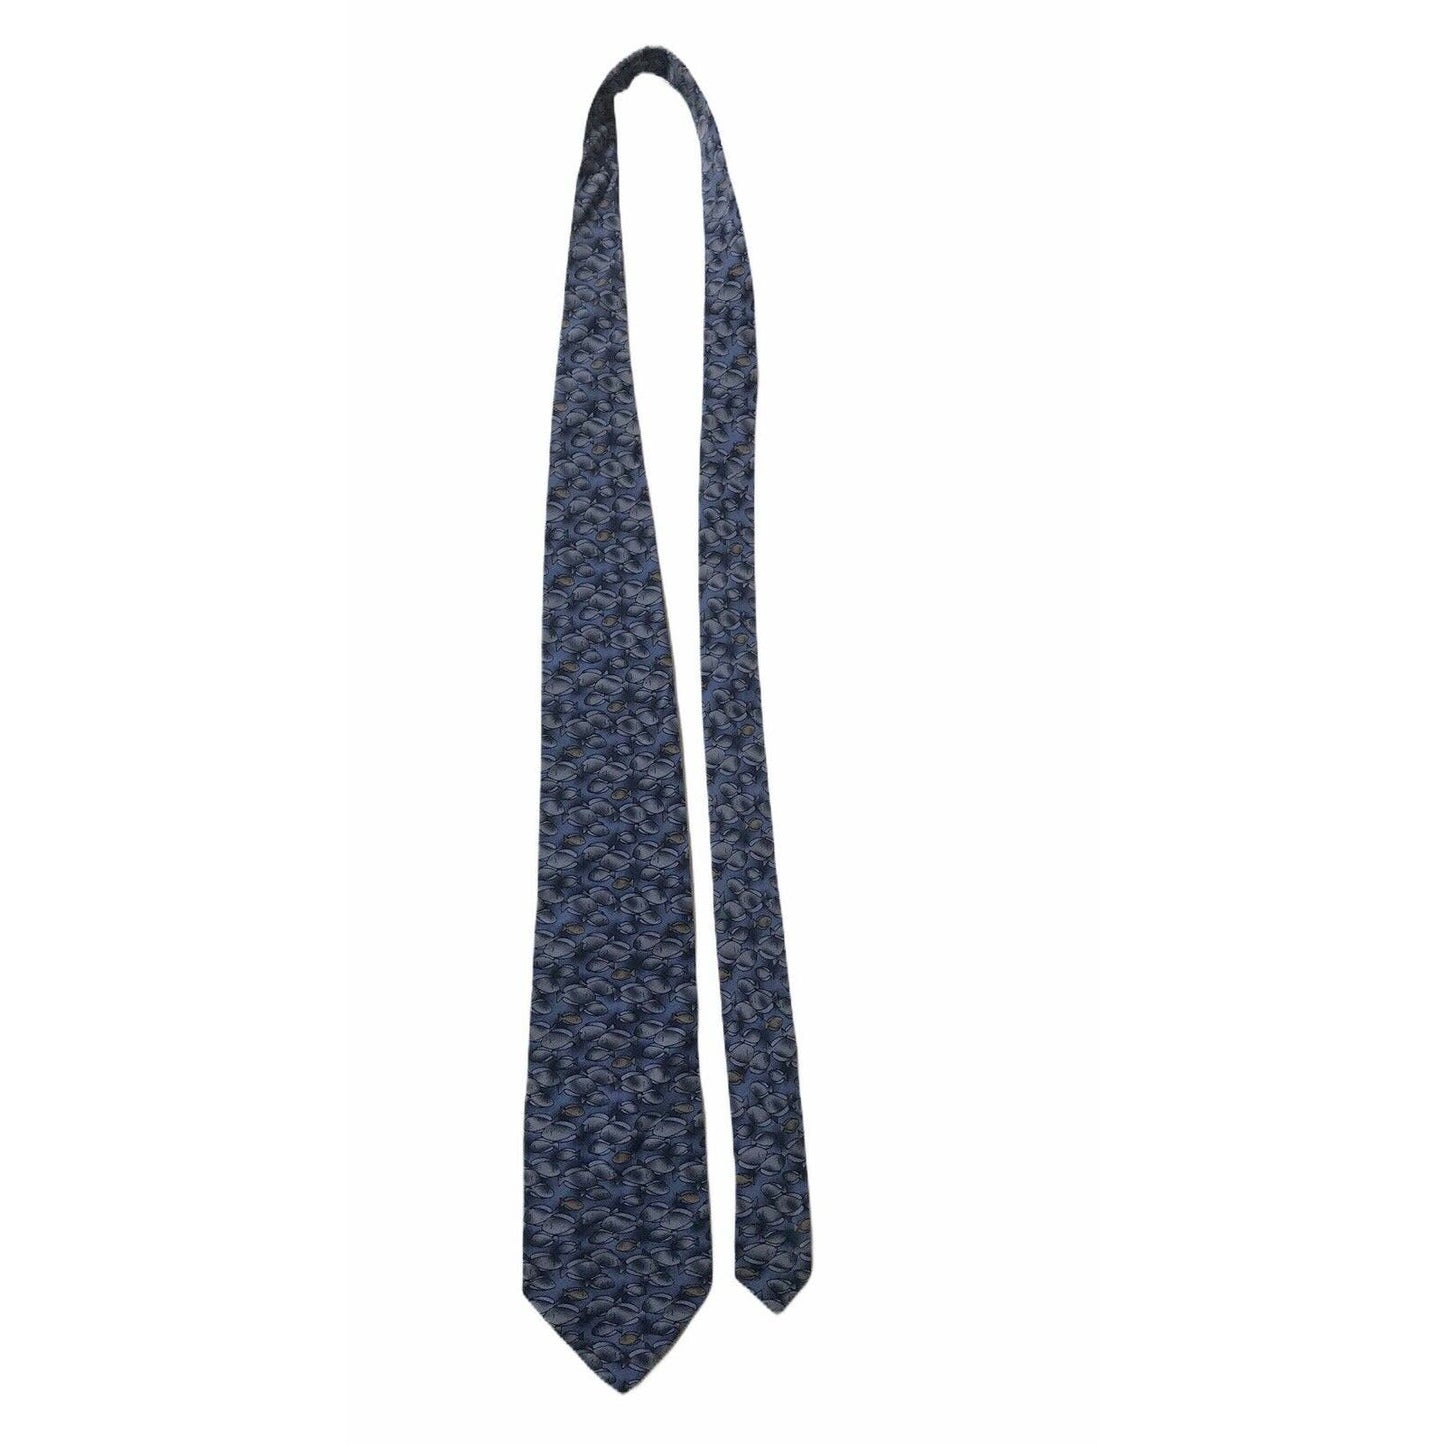 Ties To Nature Fish Blue 100% Silk Vintage Novelty Tie Necktie